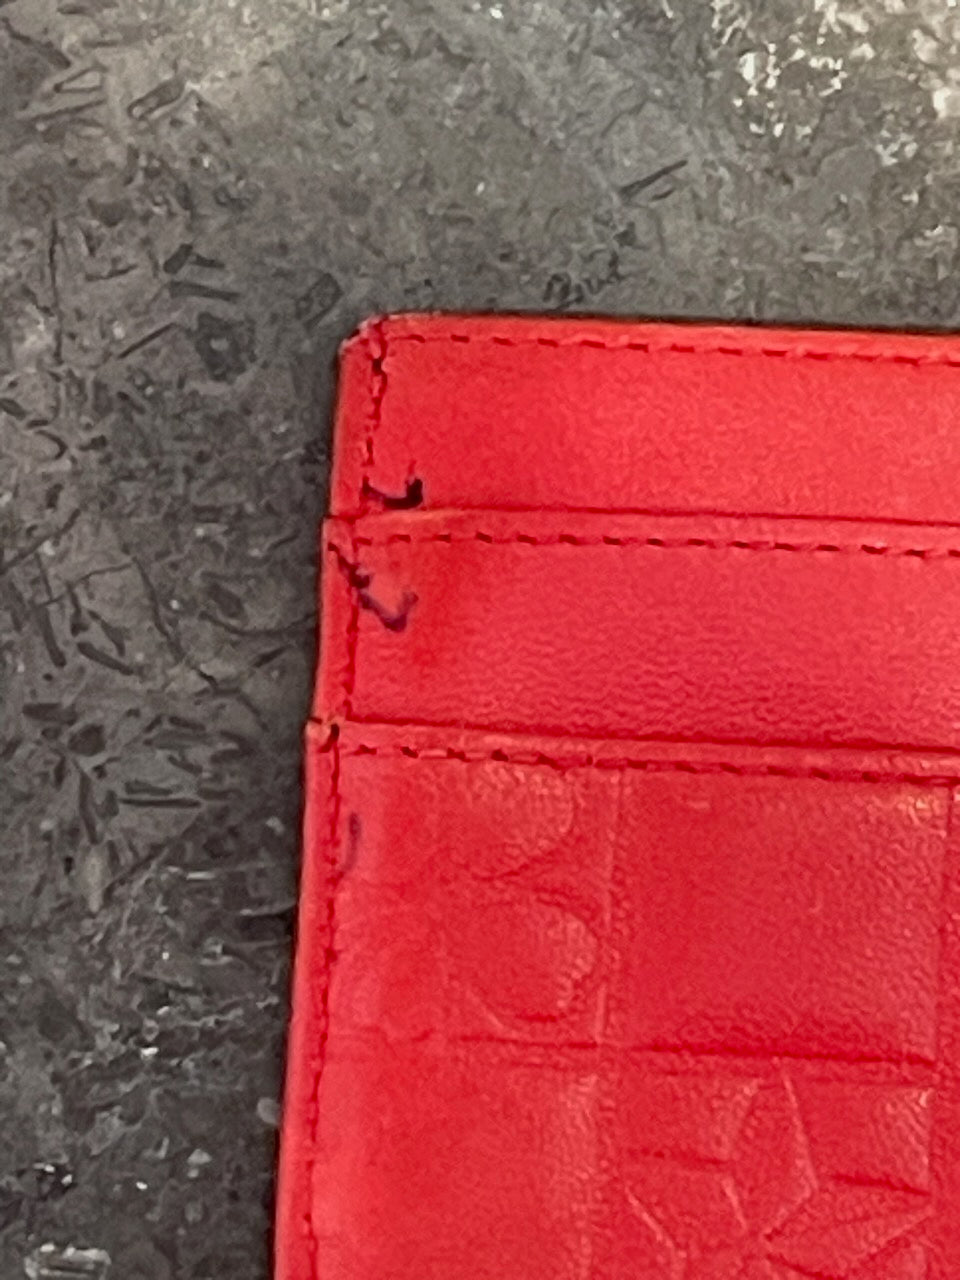 Porte-cartes Chanel rouge